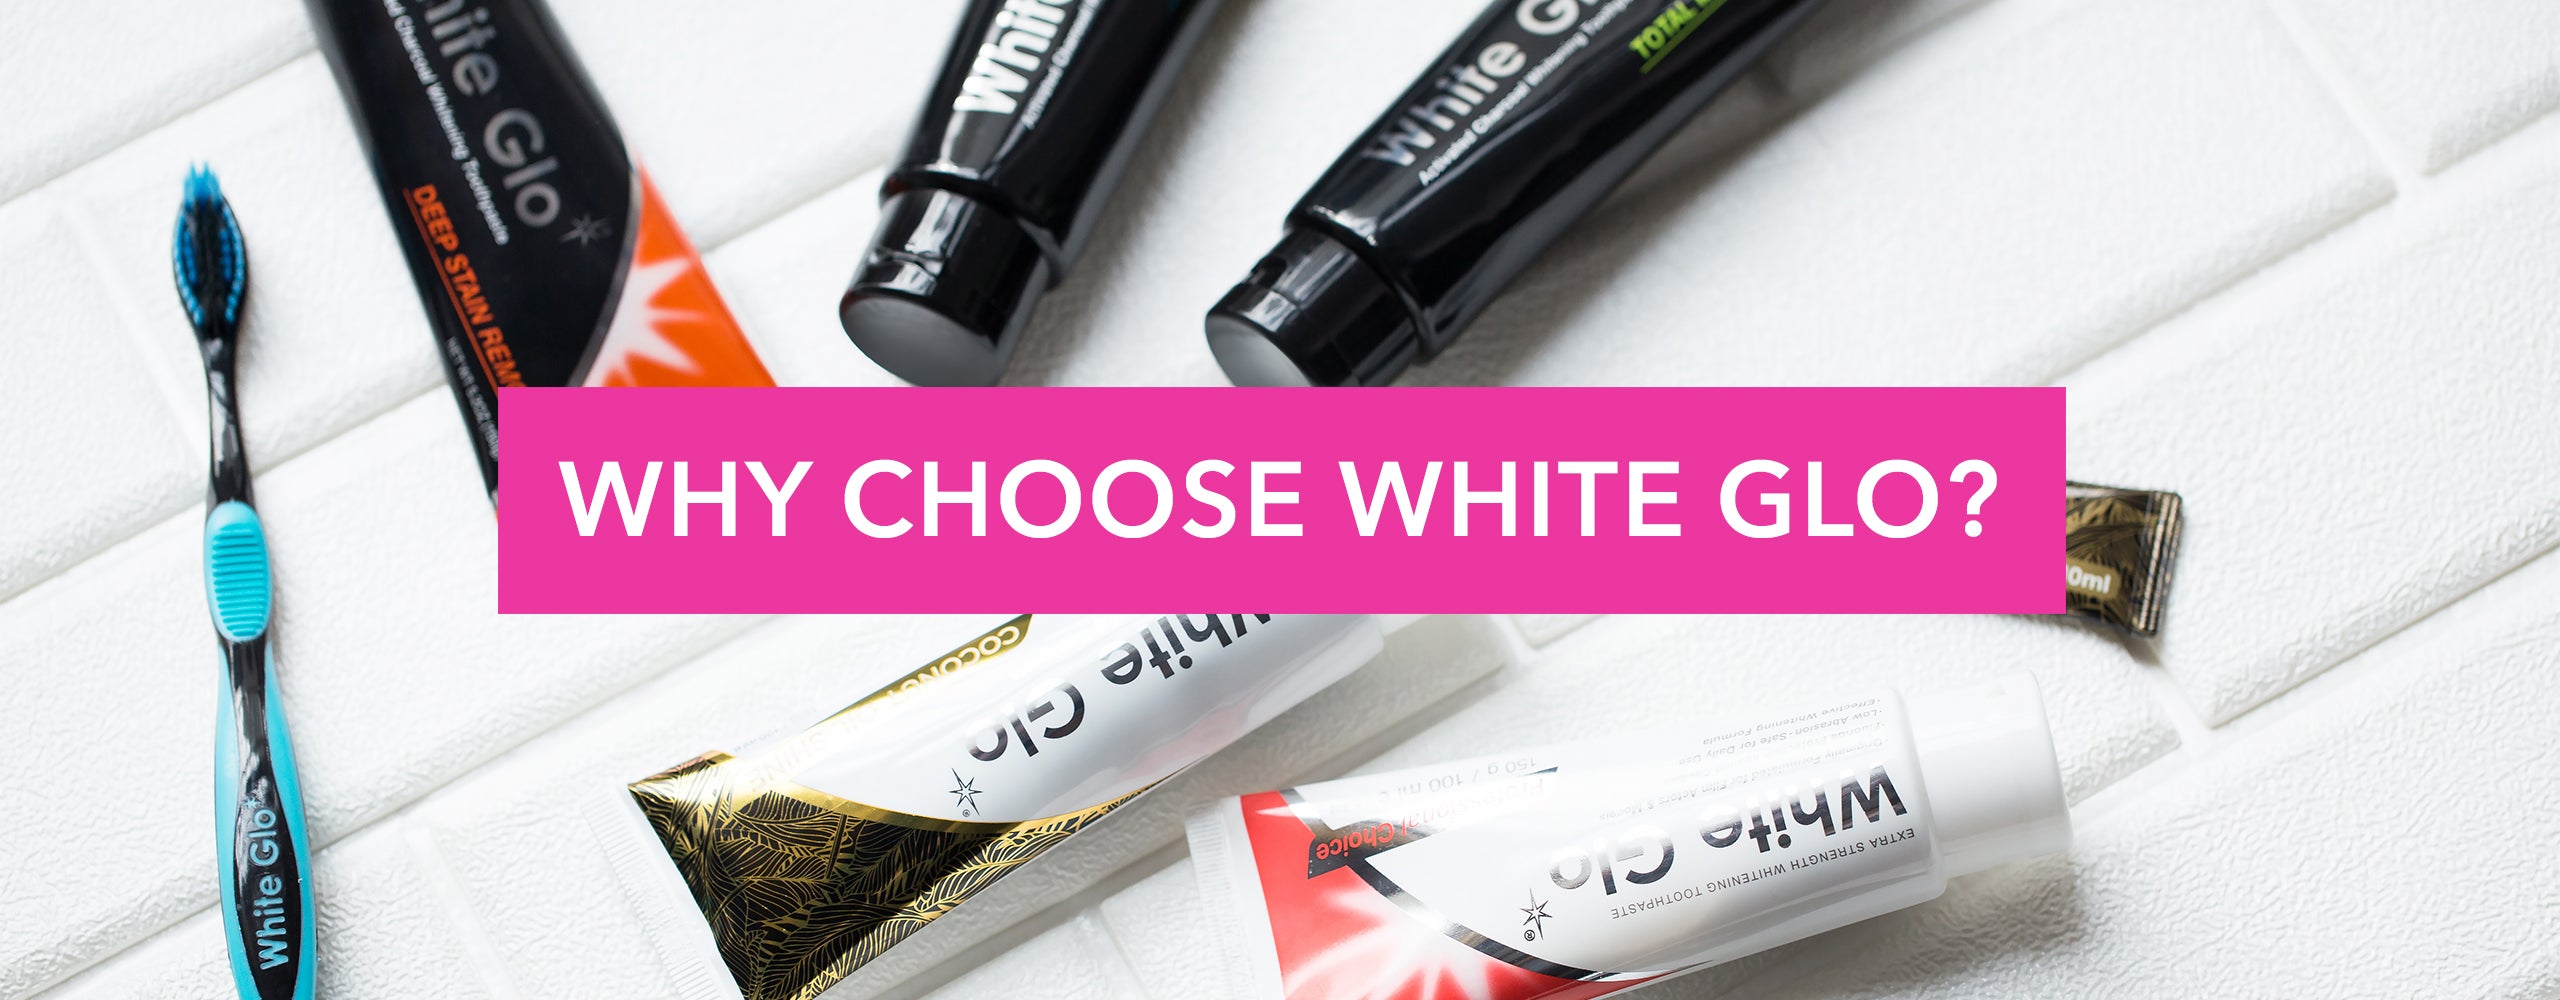 Why choose White Glo?